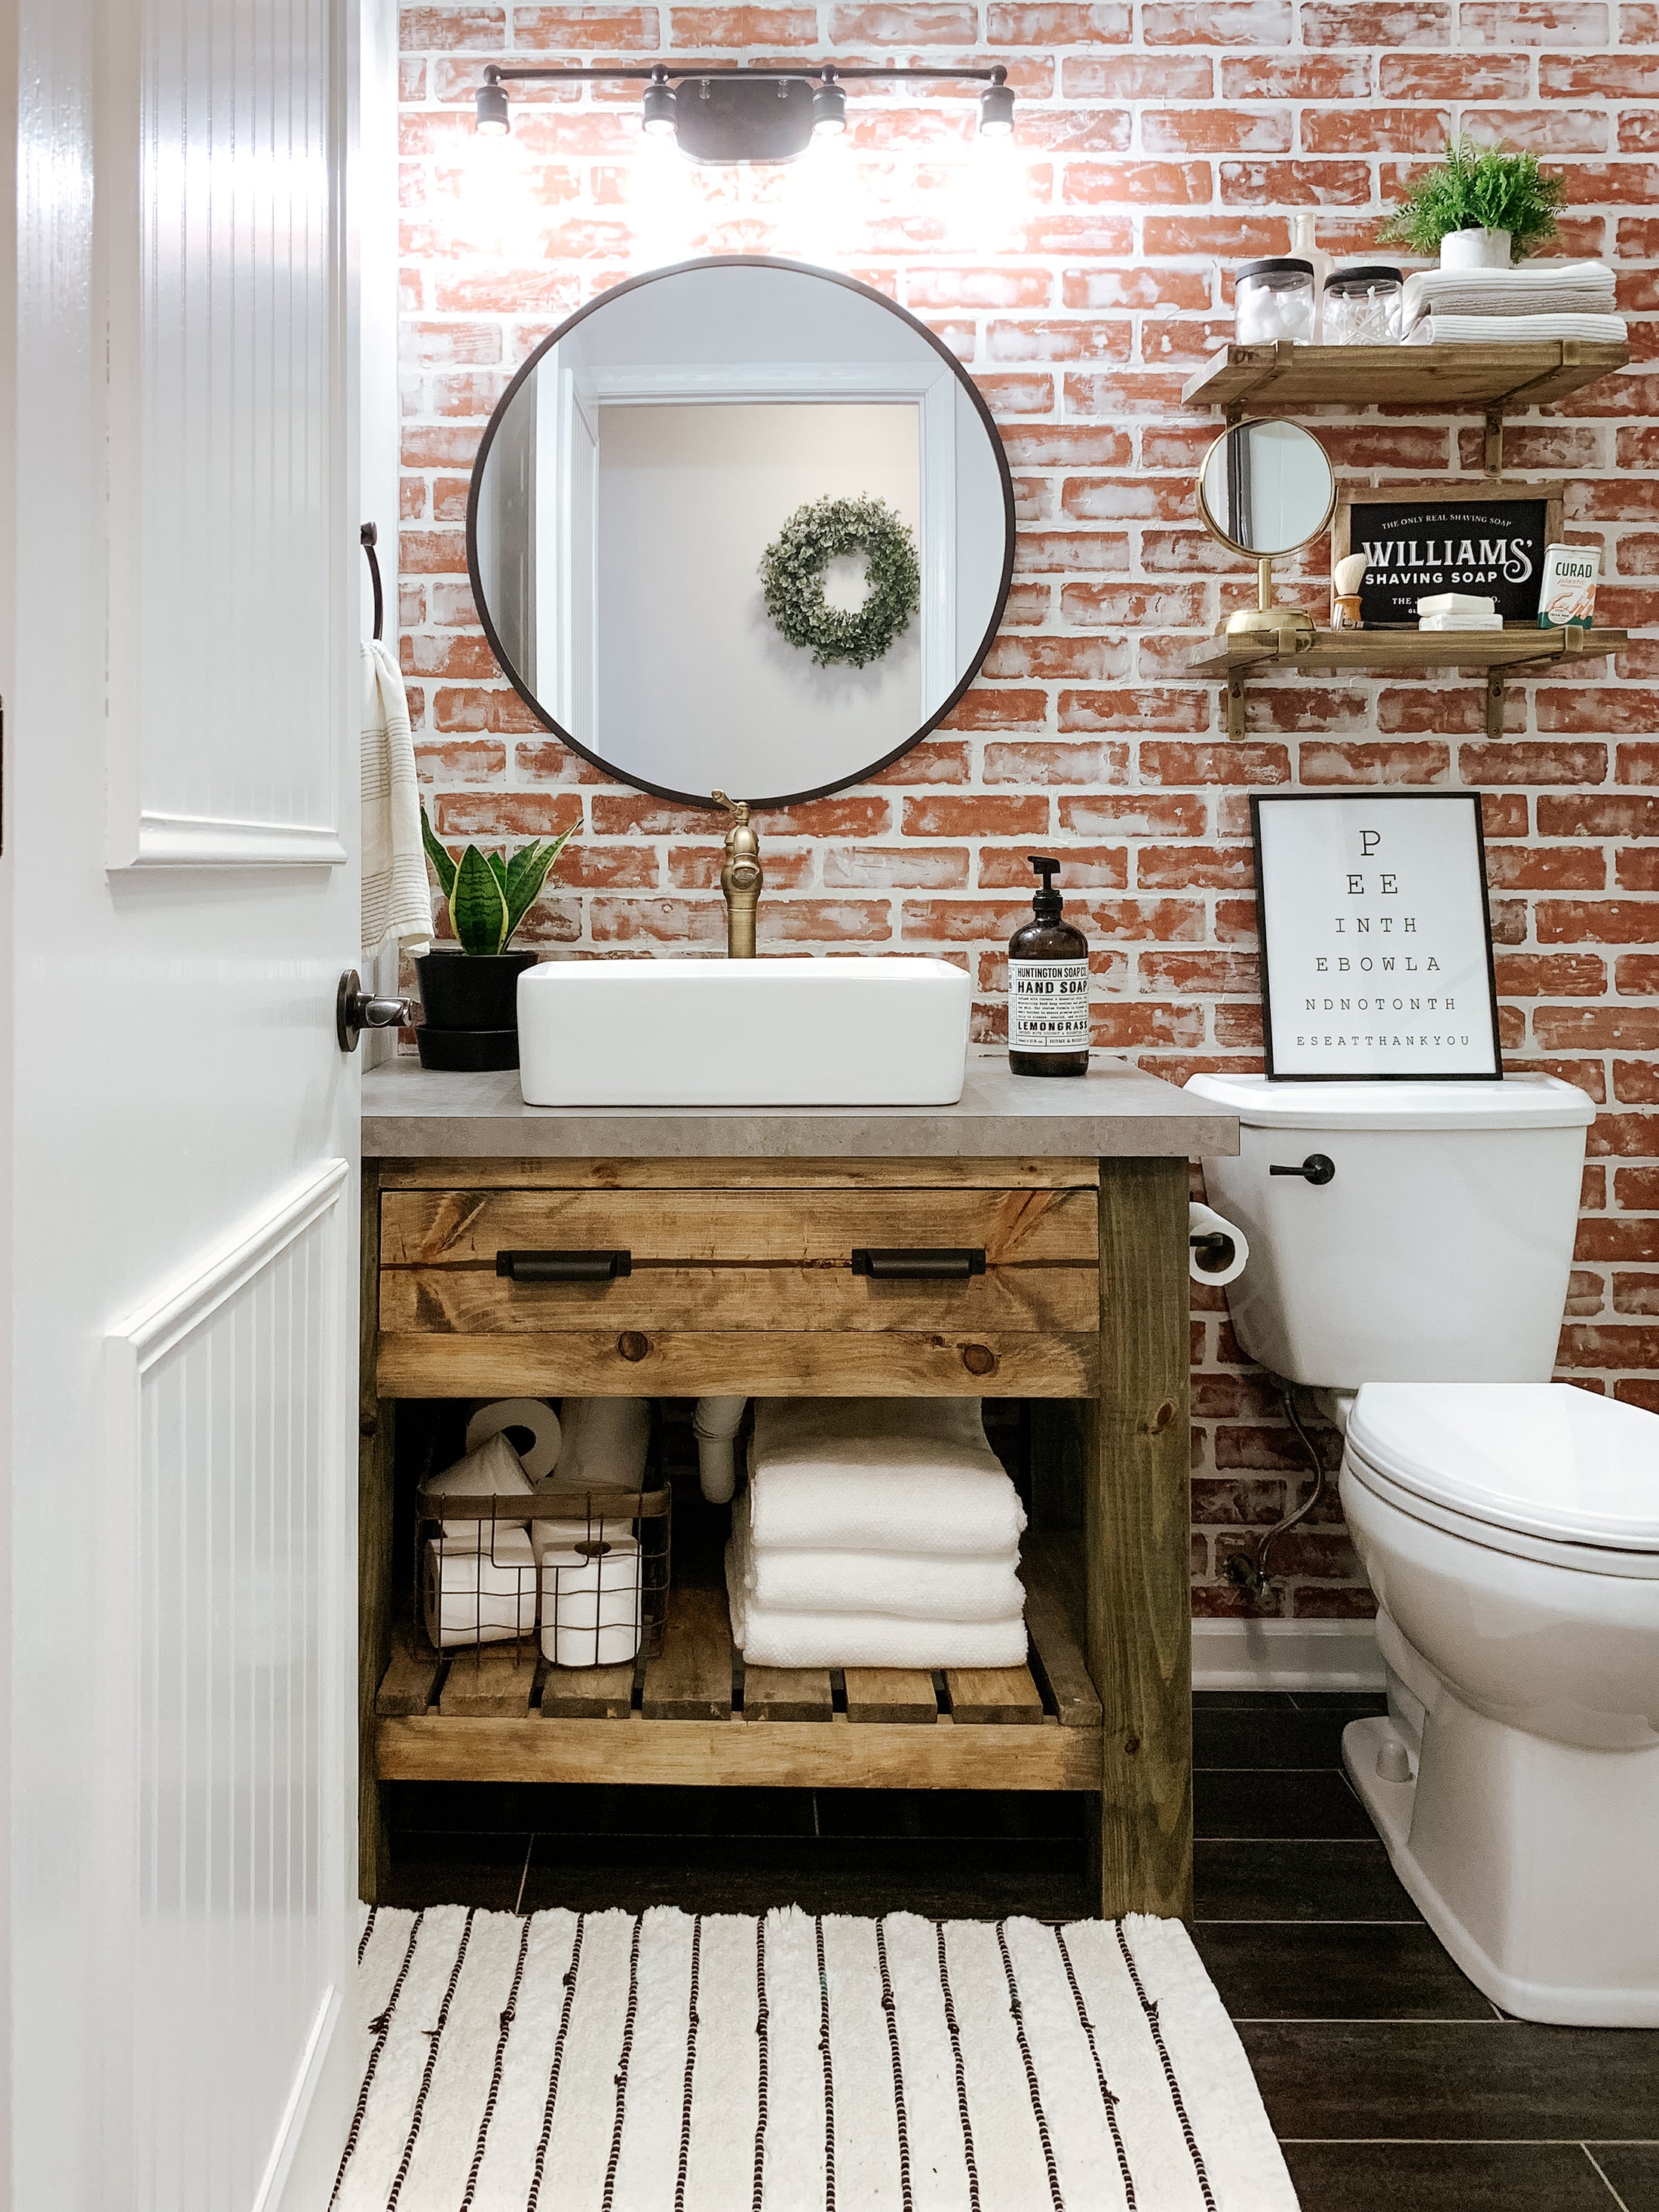 Diy Rustic Bathroom Vanity Sammy On State, Build Your Own Rustic Bathroom Vanity